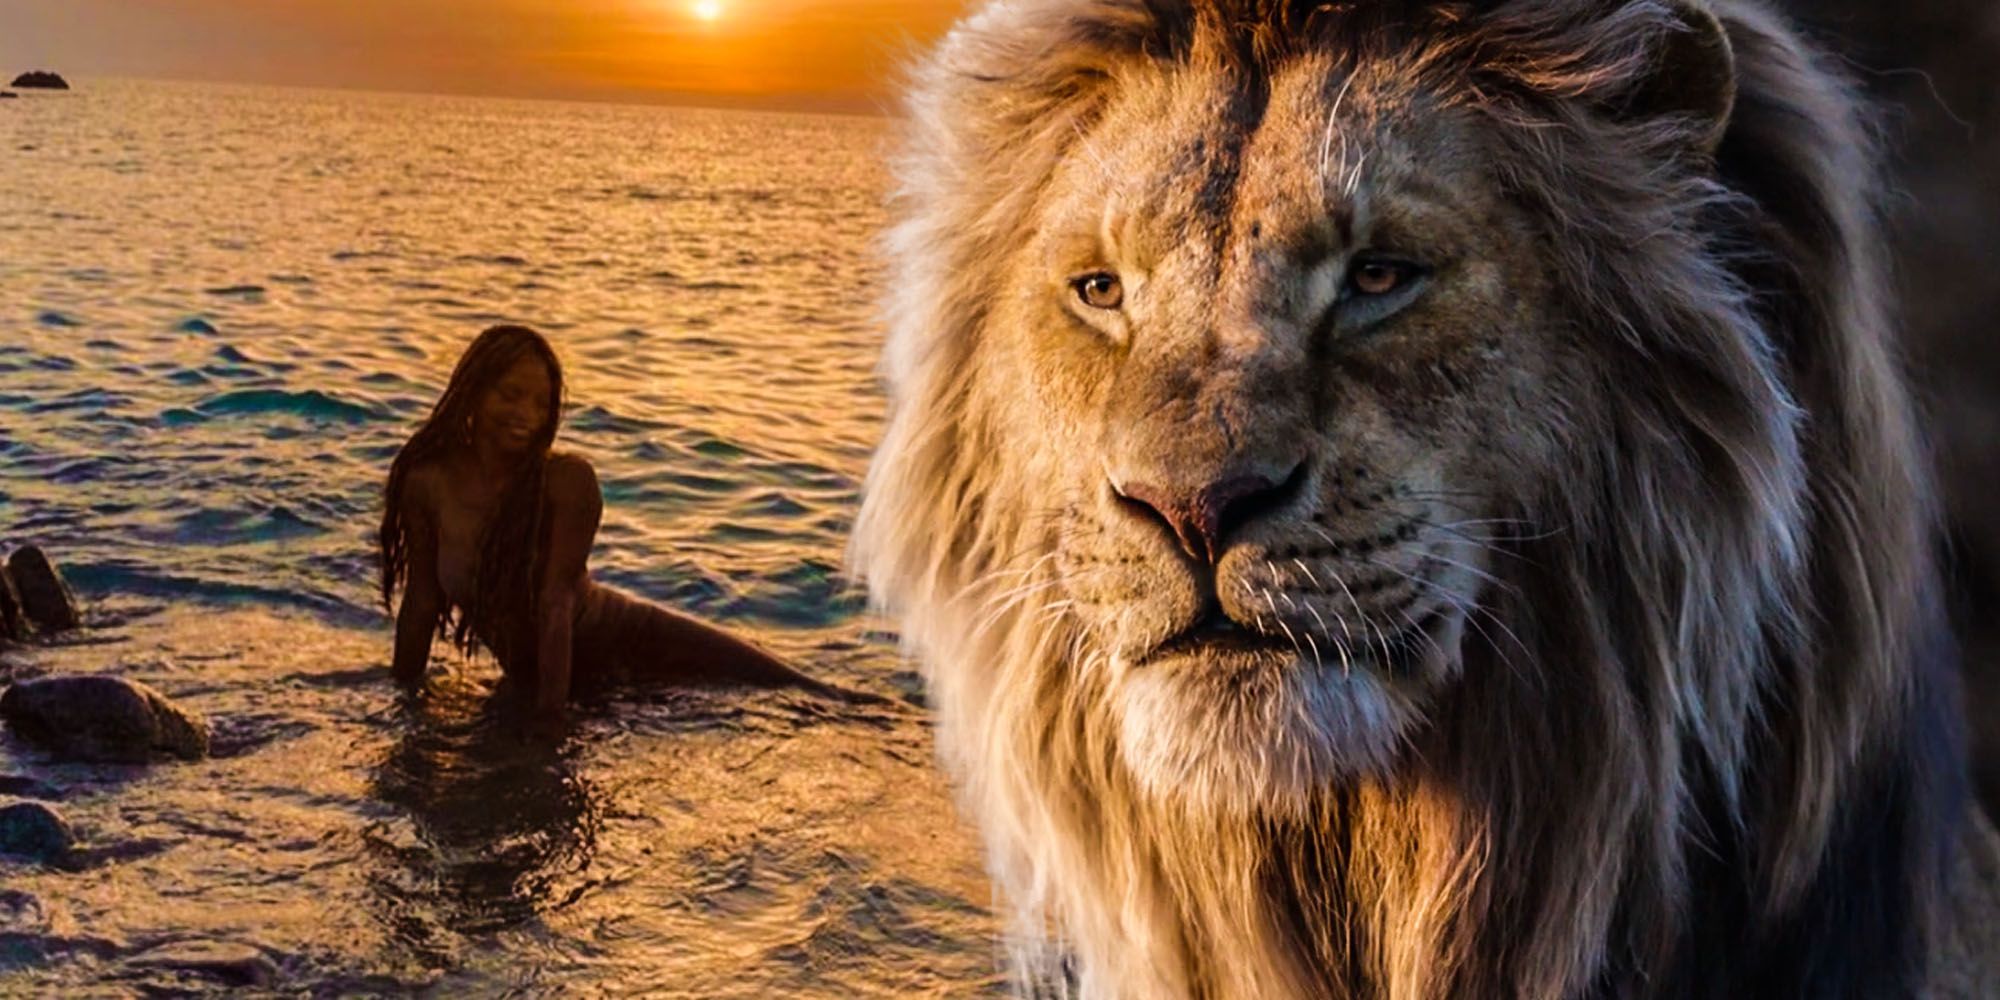 The Little Mermaids Underwater World Needs To Avoid Lion Kings CGI Realism